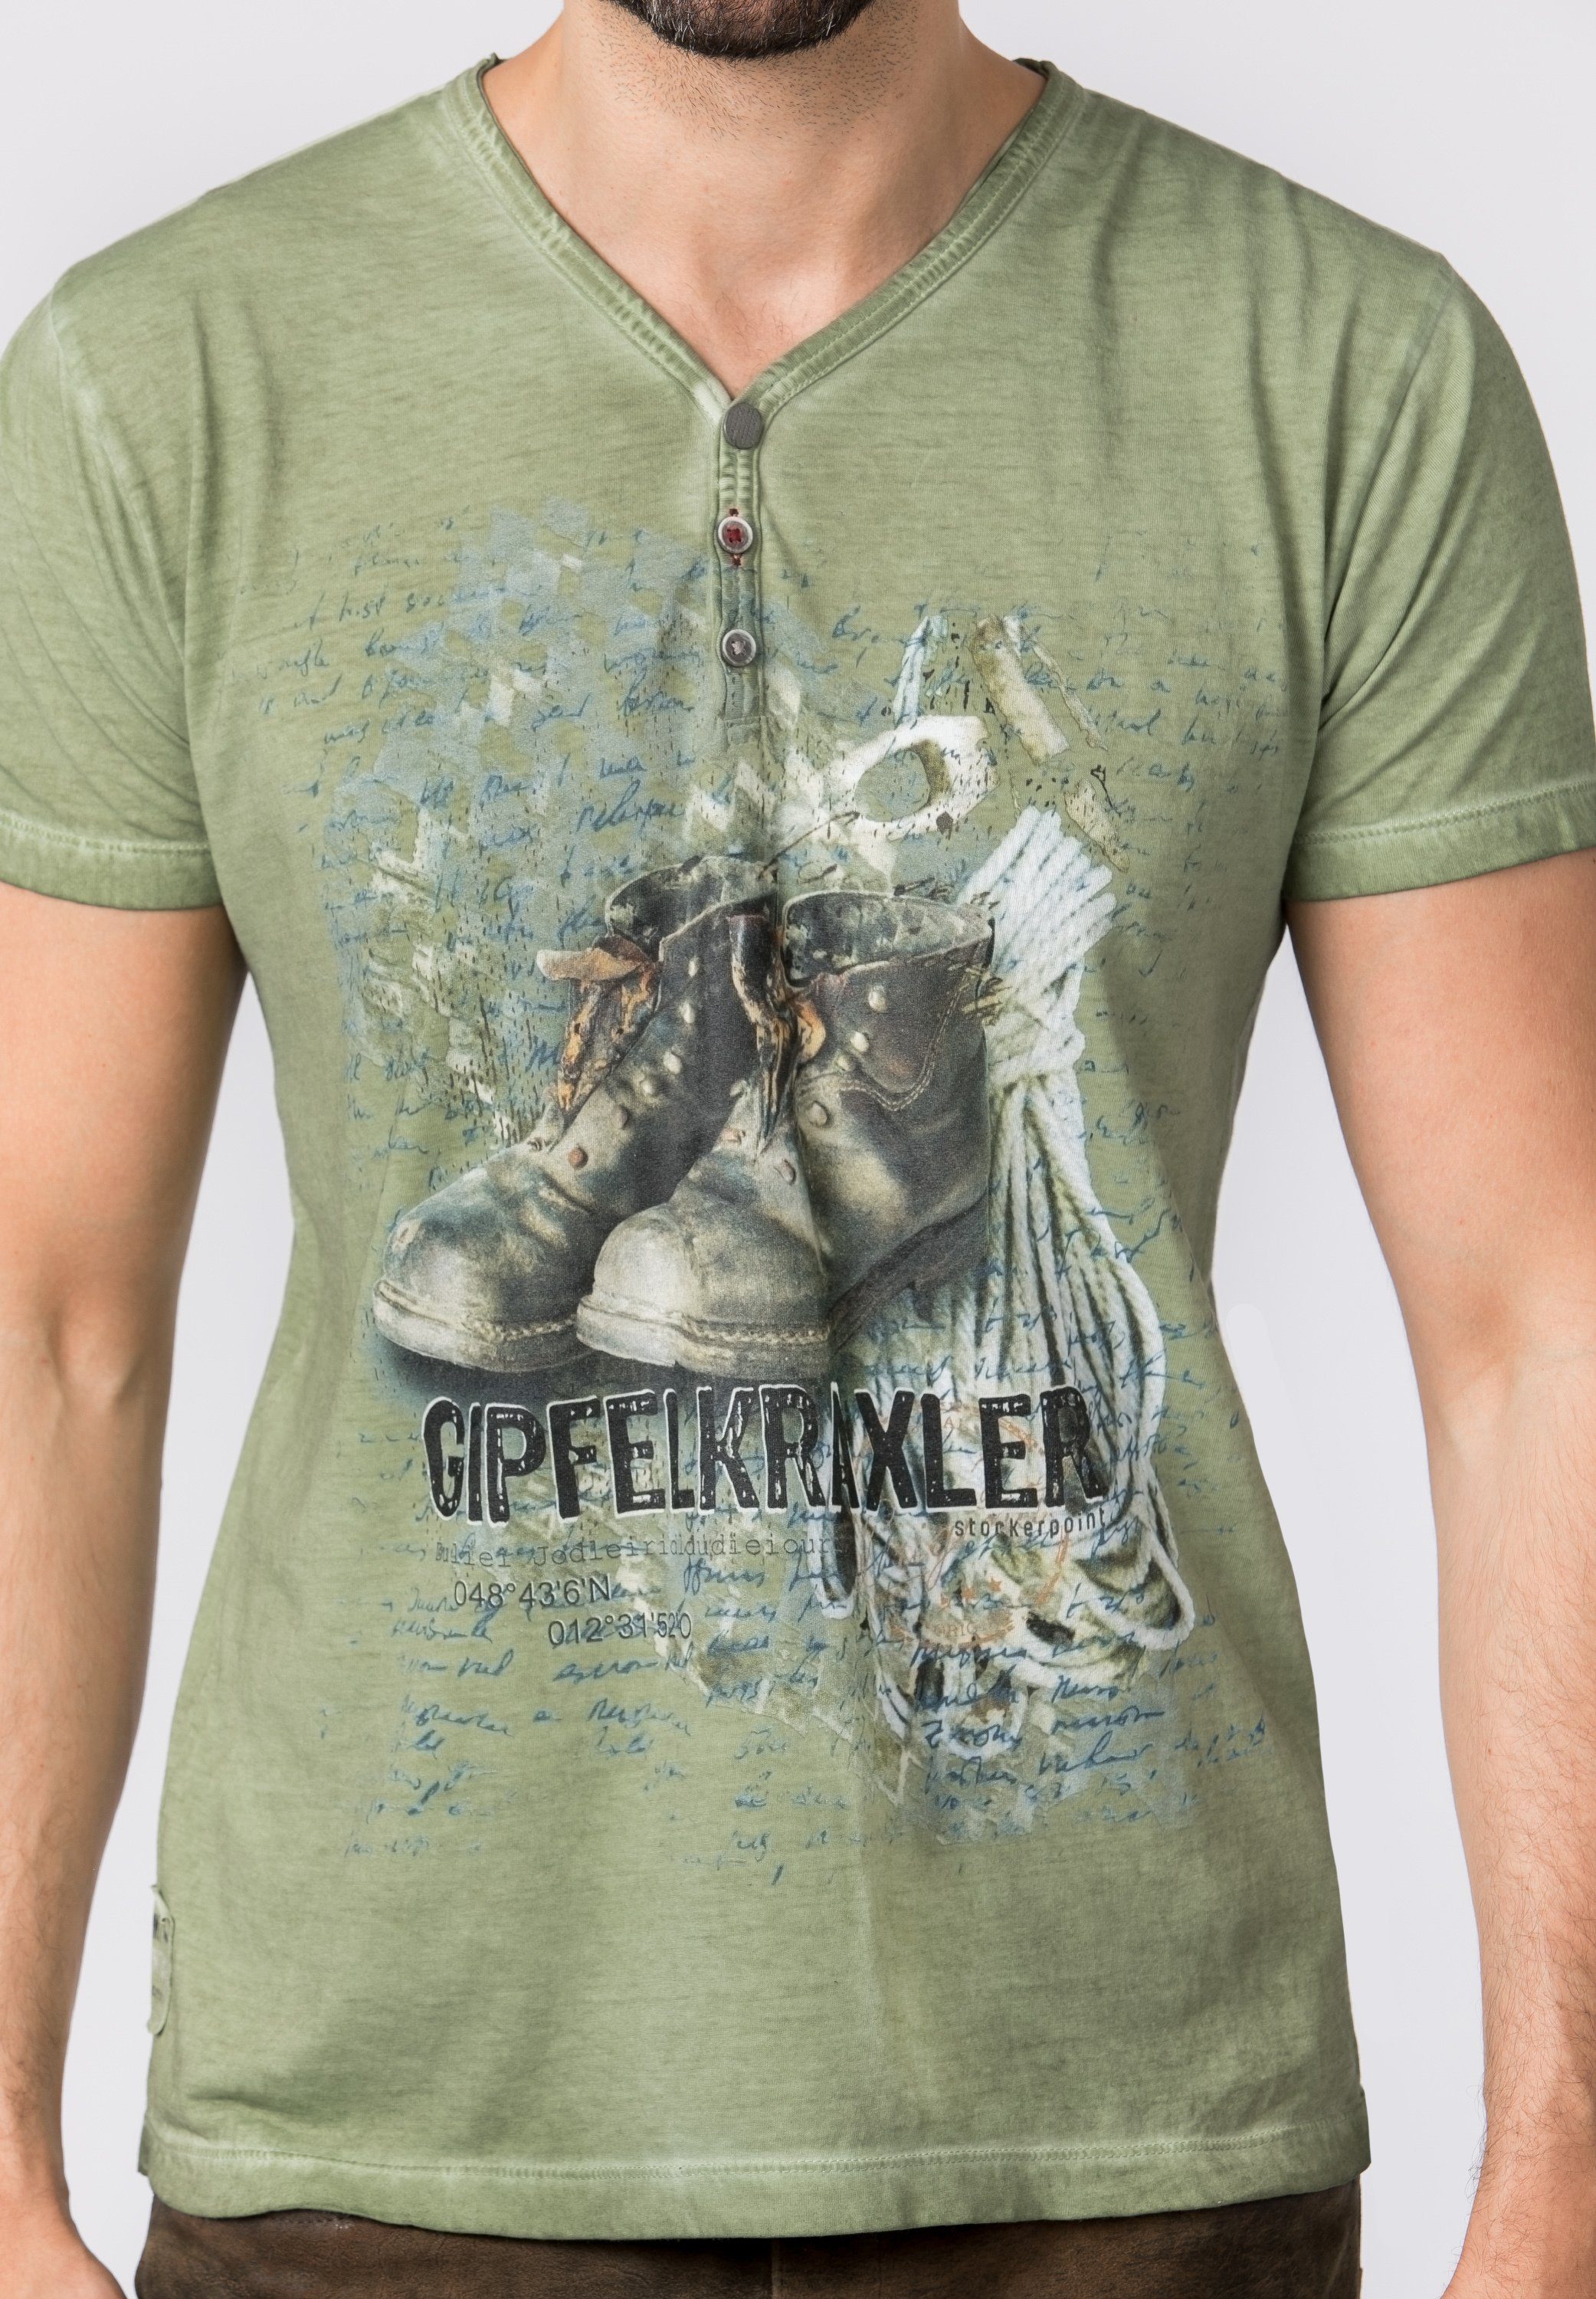 Gipfelkraxler T-Shirt Stockerpoint grün